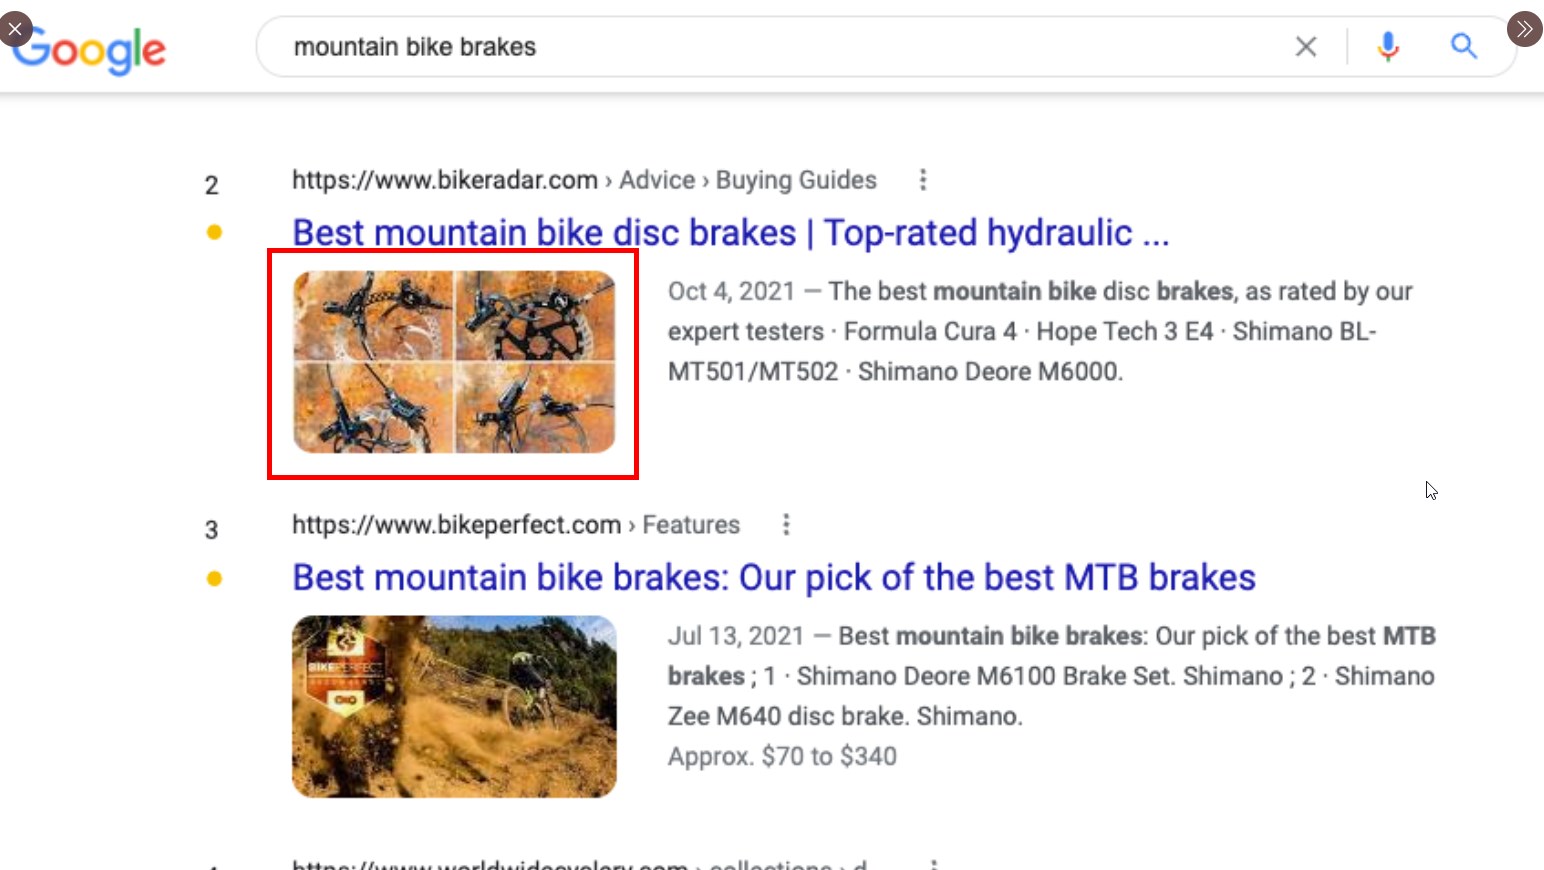 Google Tests Images Thumbnail On Left Side Of Description on SERPs